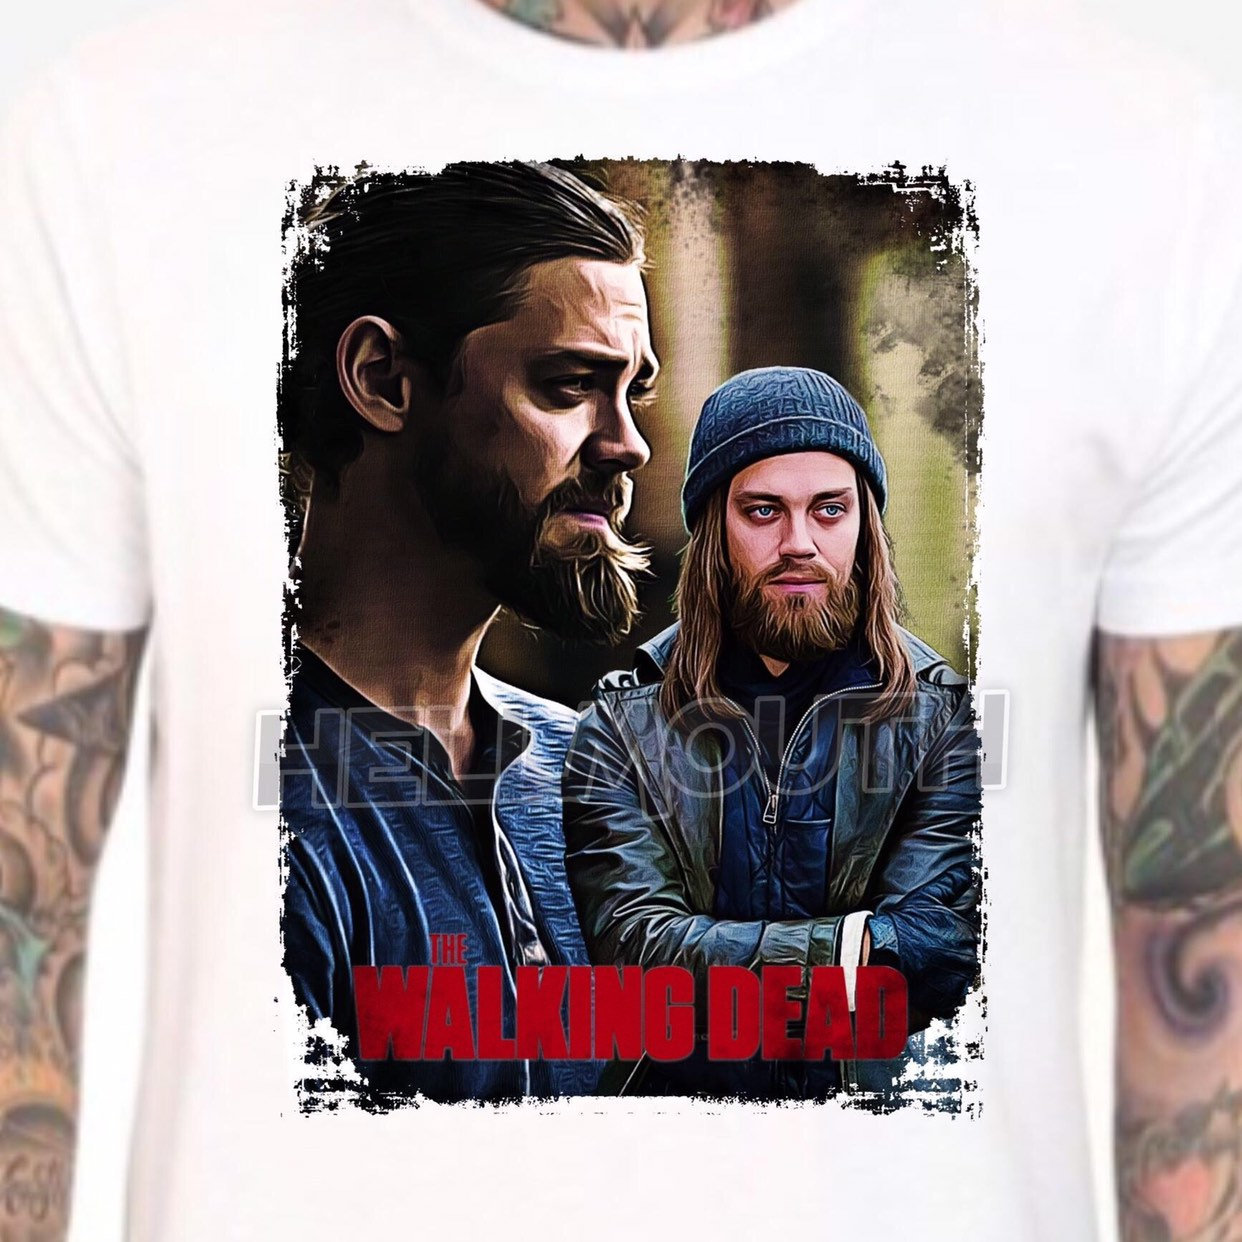 Custom T-Shirts for Walking Dead Girls - Shirt Design Ideas